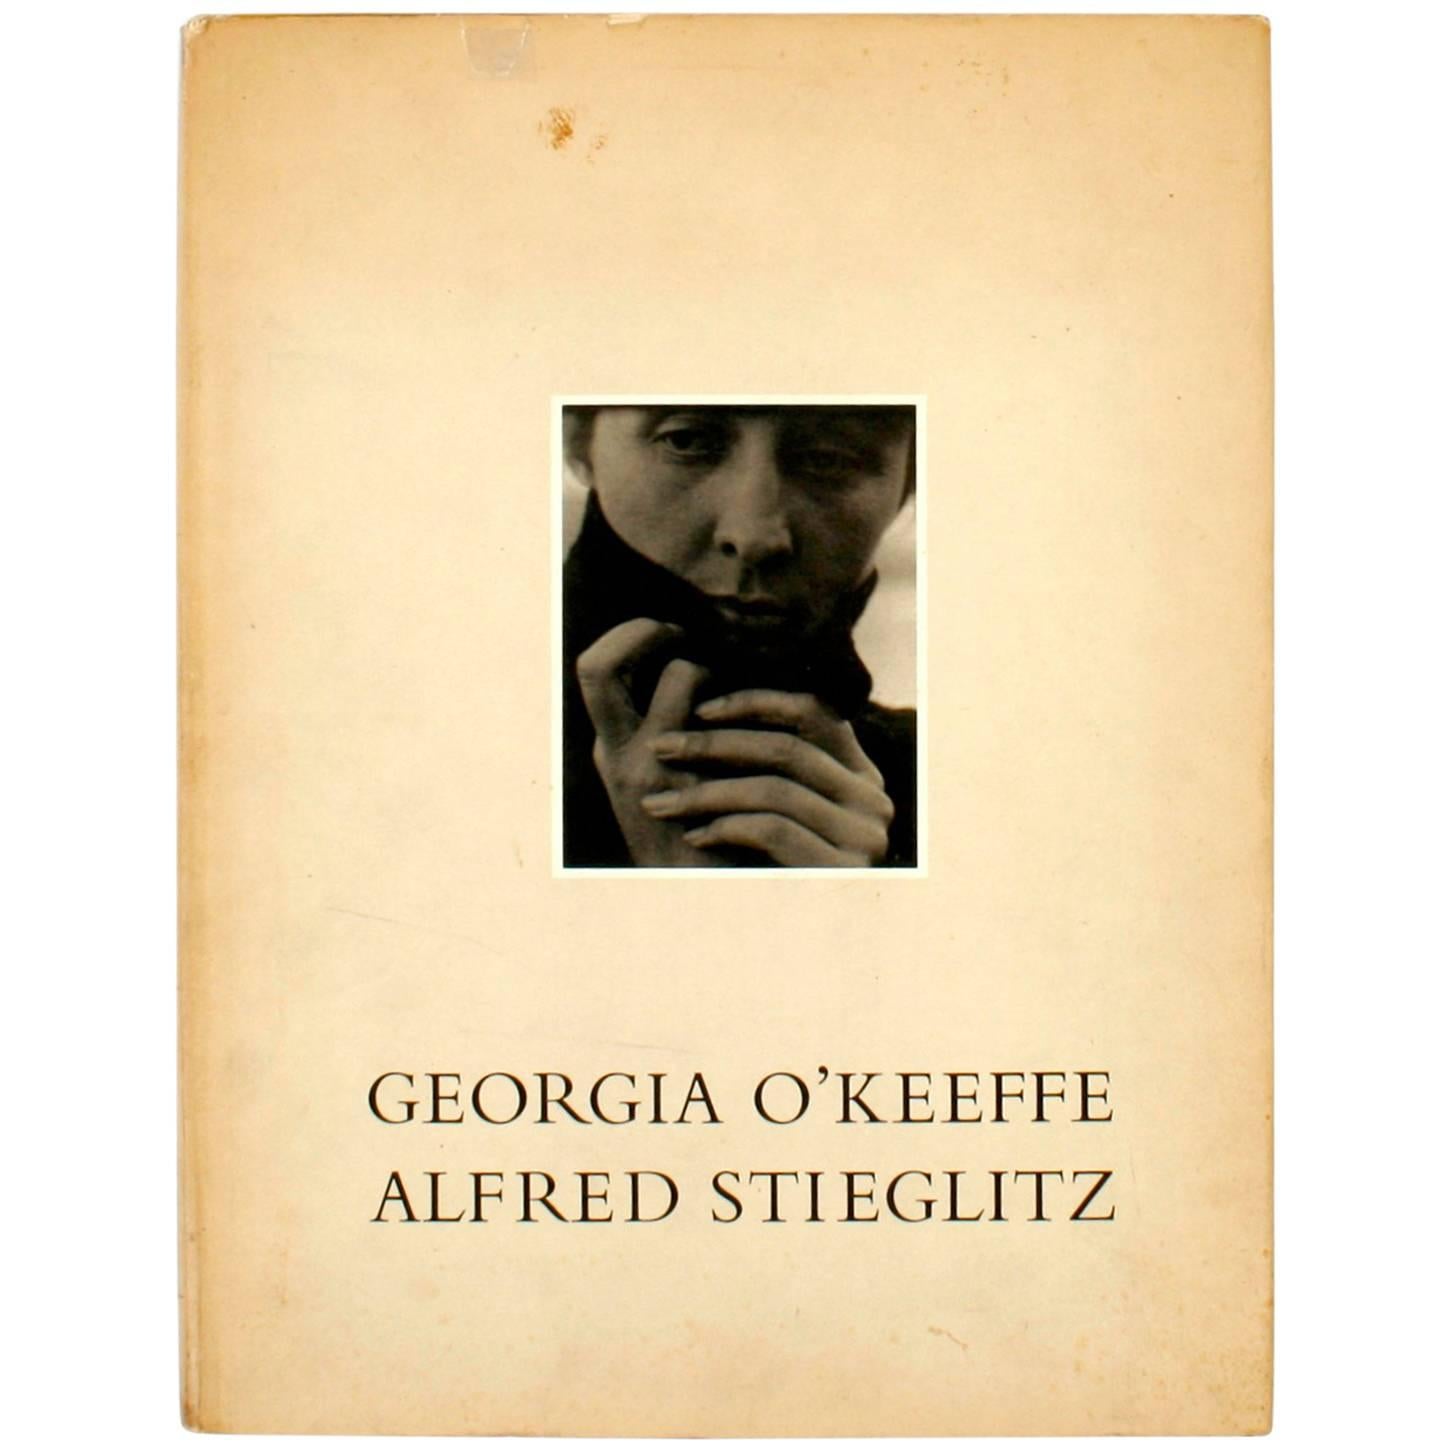 “Georgia O'Keeffe” A Portrait by Alfred Stieglitz and Georgia O'Keeffe